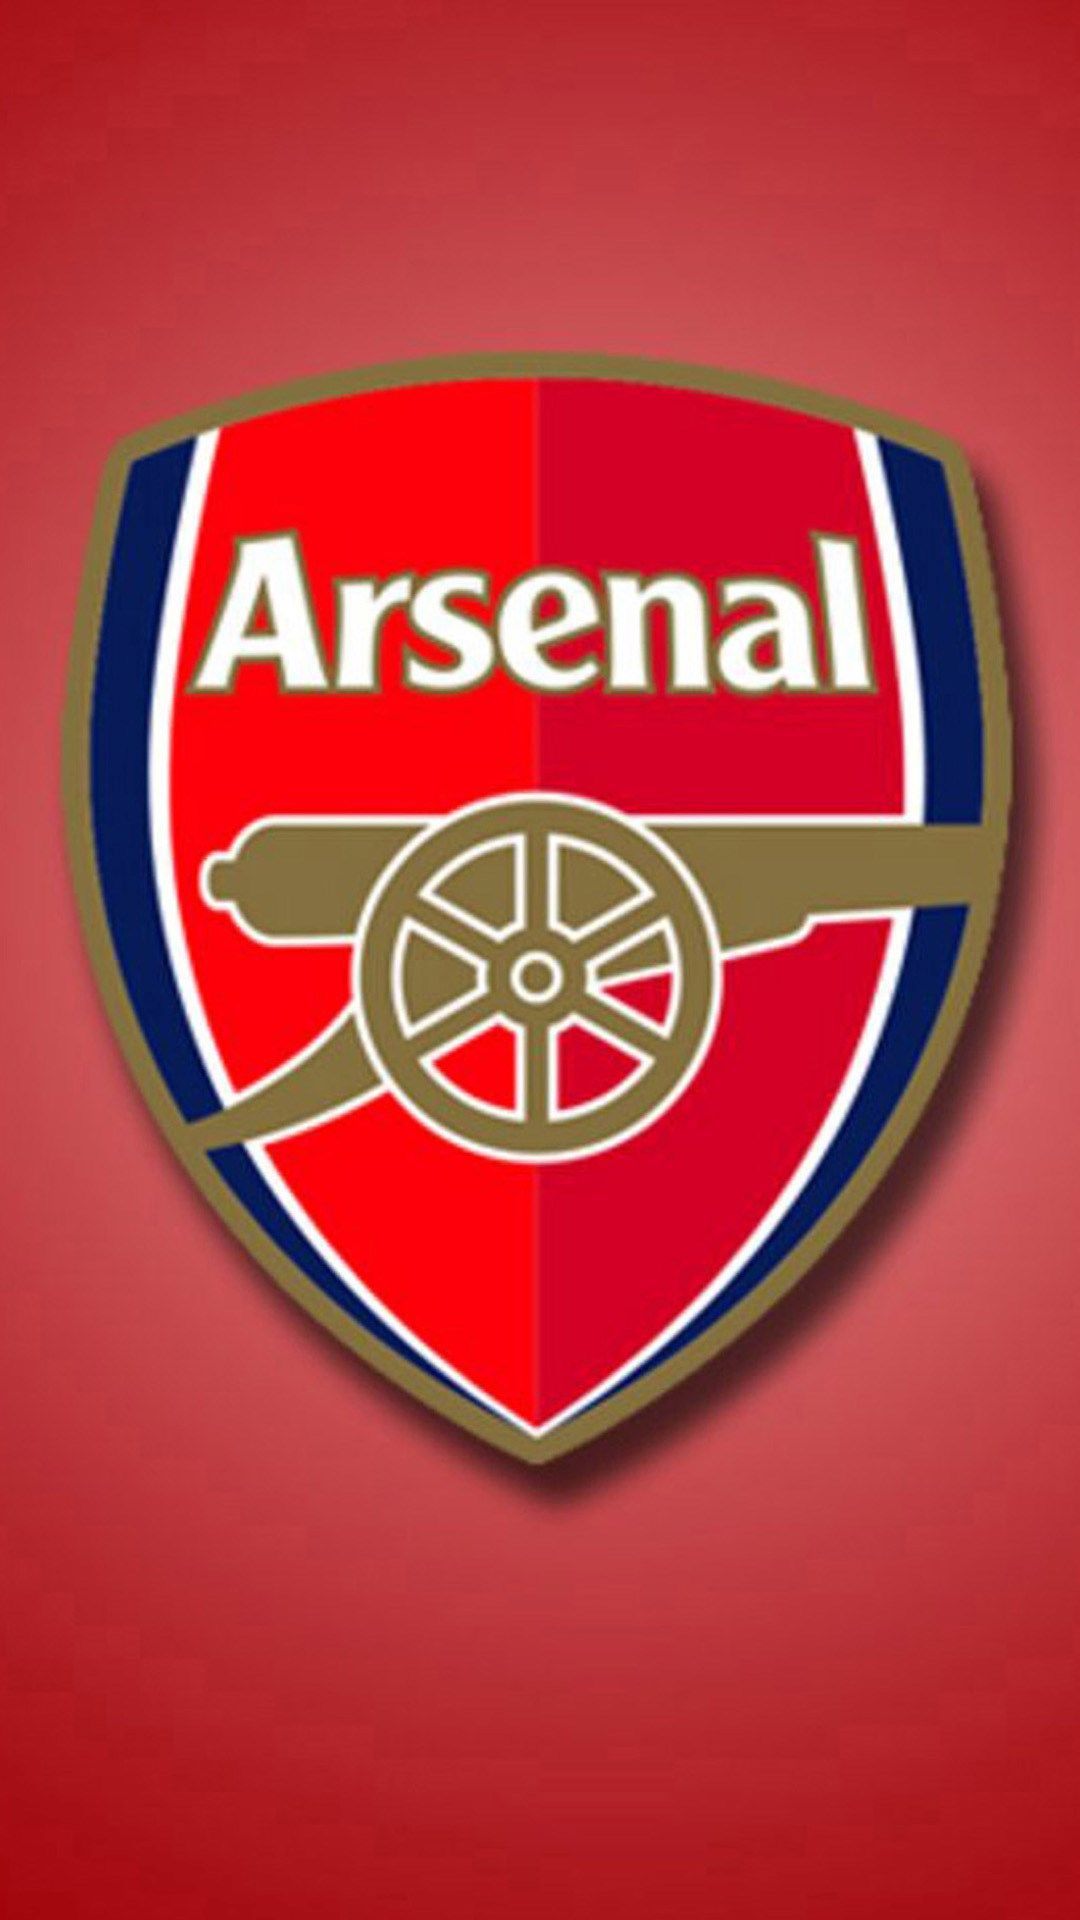 Arsenal Fc Logo Wallpapers 4k Hd Arsenal Fc Logo Backgrounds On Wallpaperbat